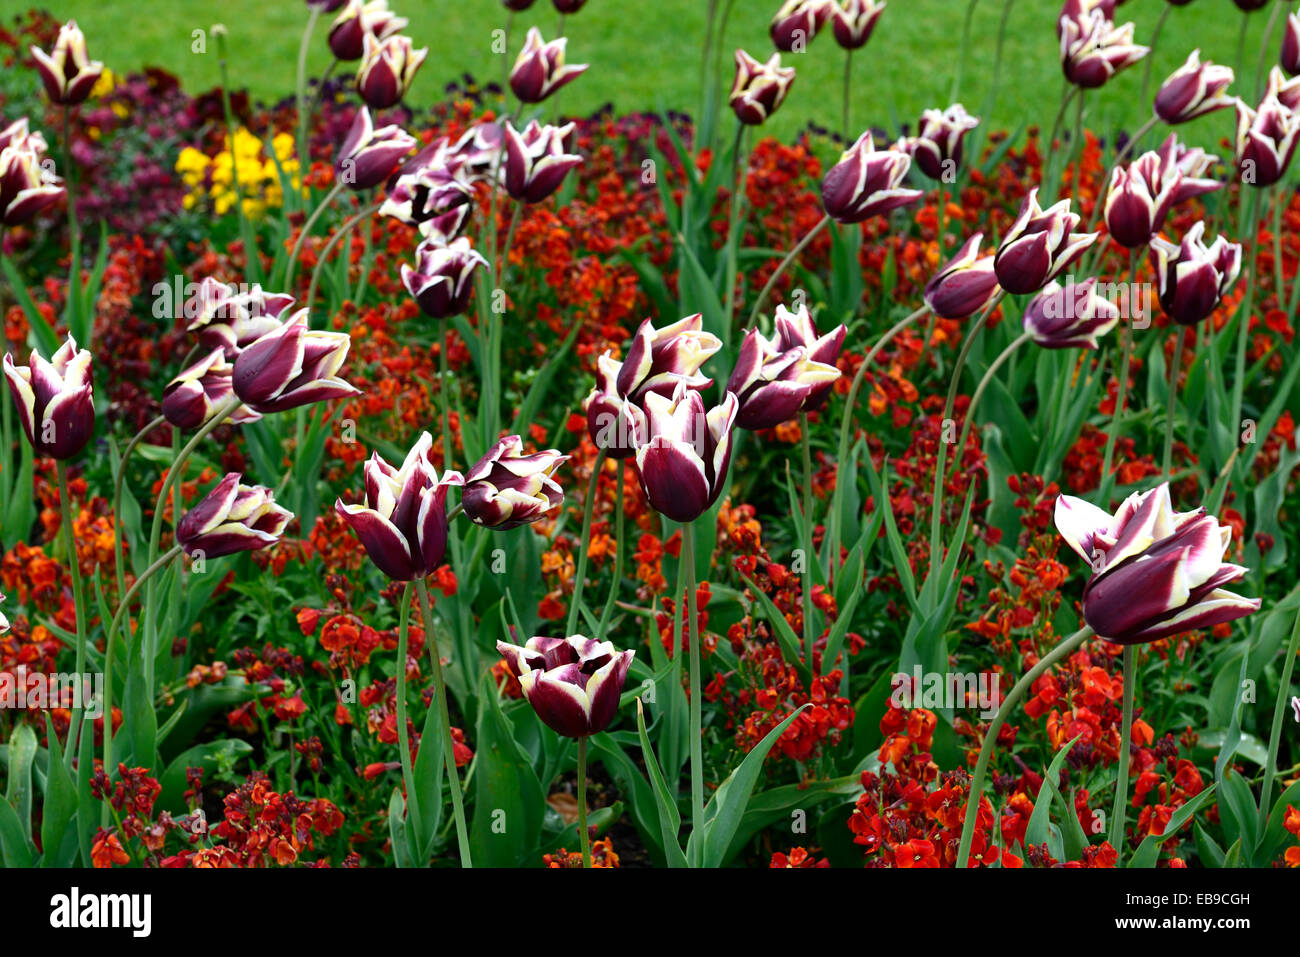 tulipa gavota triumph wallflower scarlet bedder white red purple plant planting scheme bed border spring combination RM Floral Stock Photo